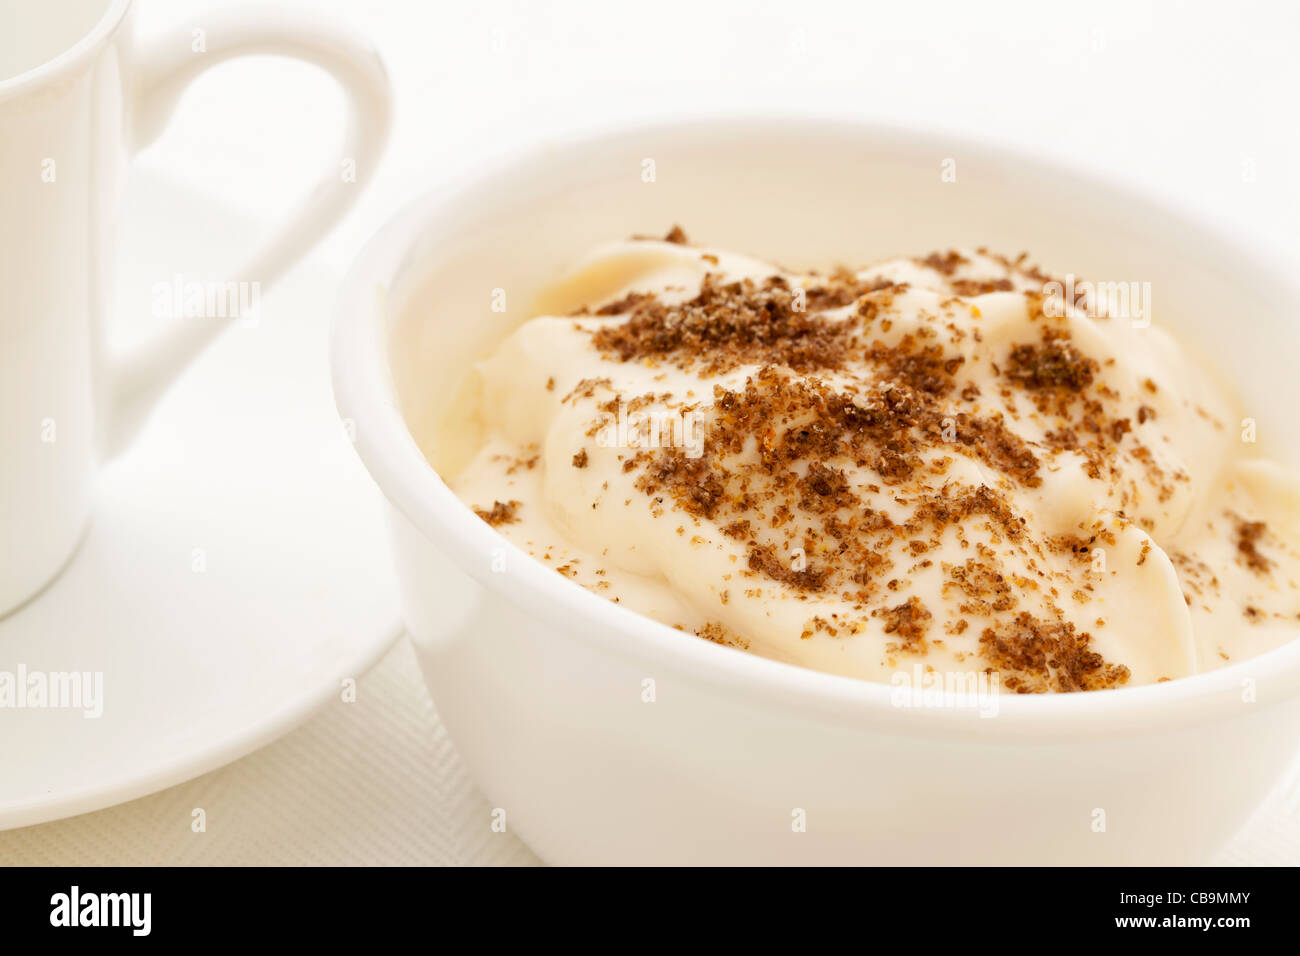 ground chia seeds sprinkled on yogurt - healthy breakfast concept Stock Photo